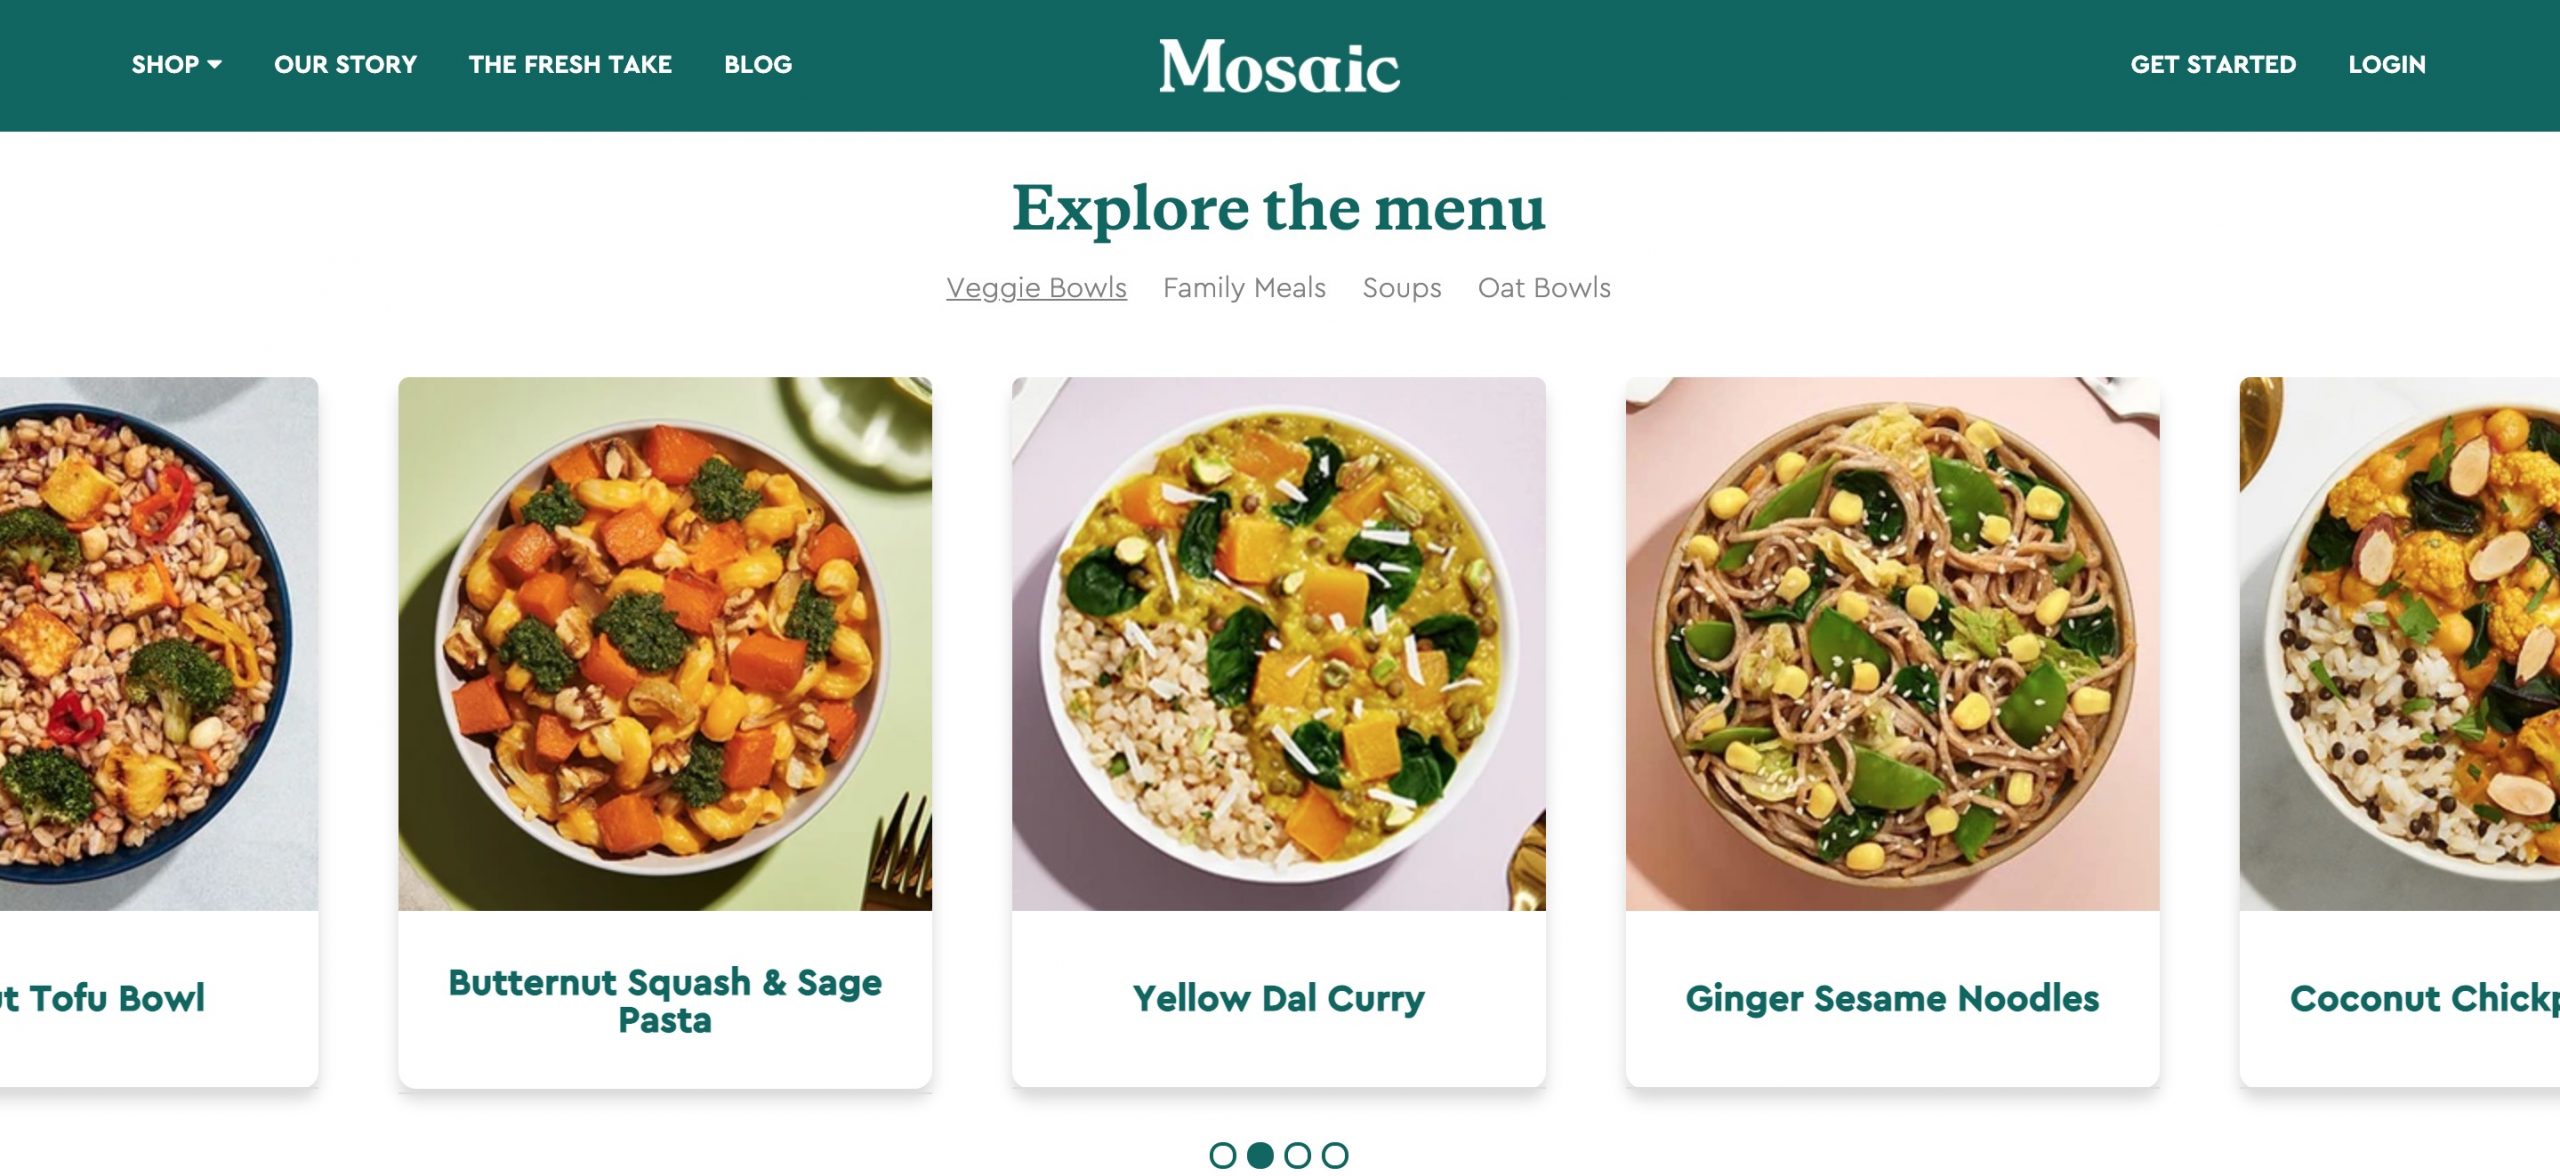 Mosaic Foods menu